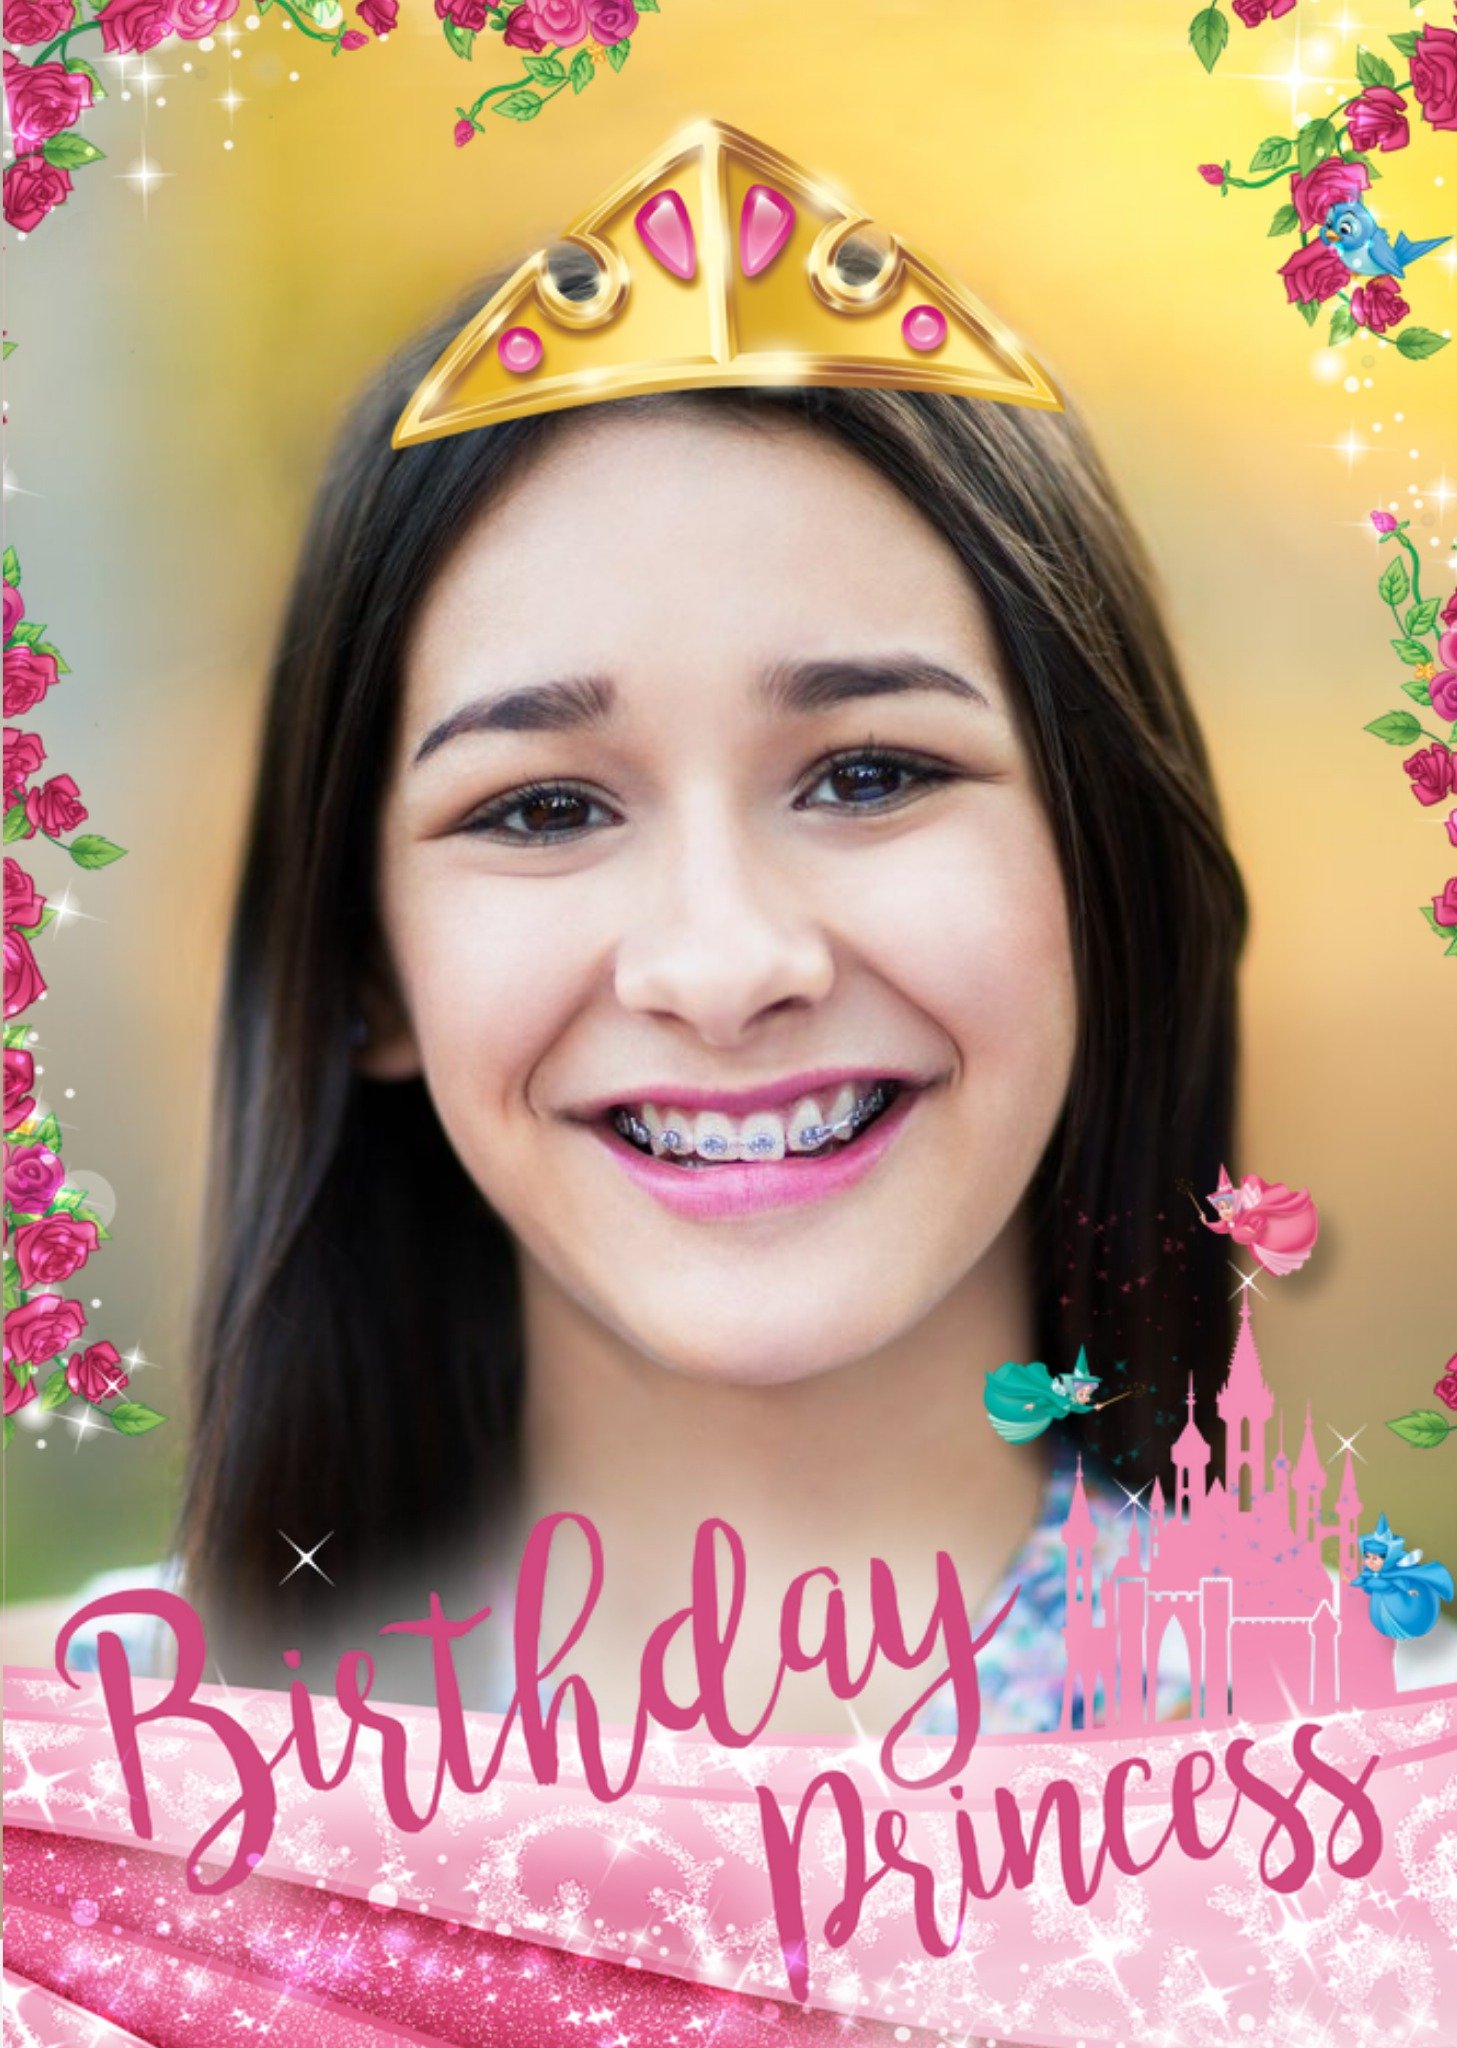 Disney Princess Sleeping Beauty Photo Upload Birthday Card Ecard